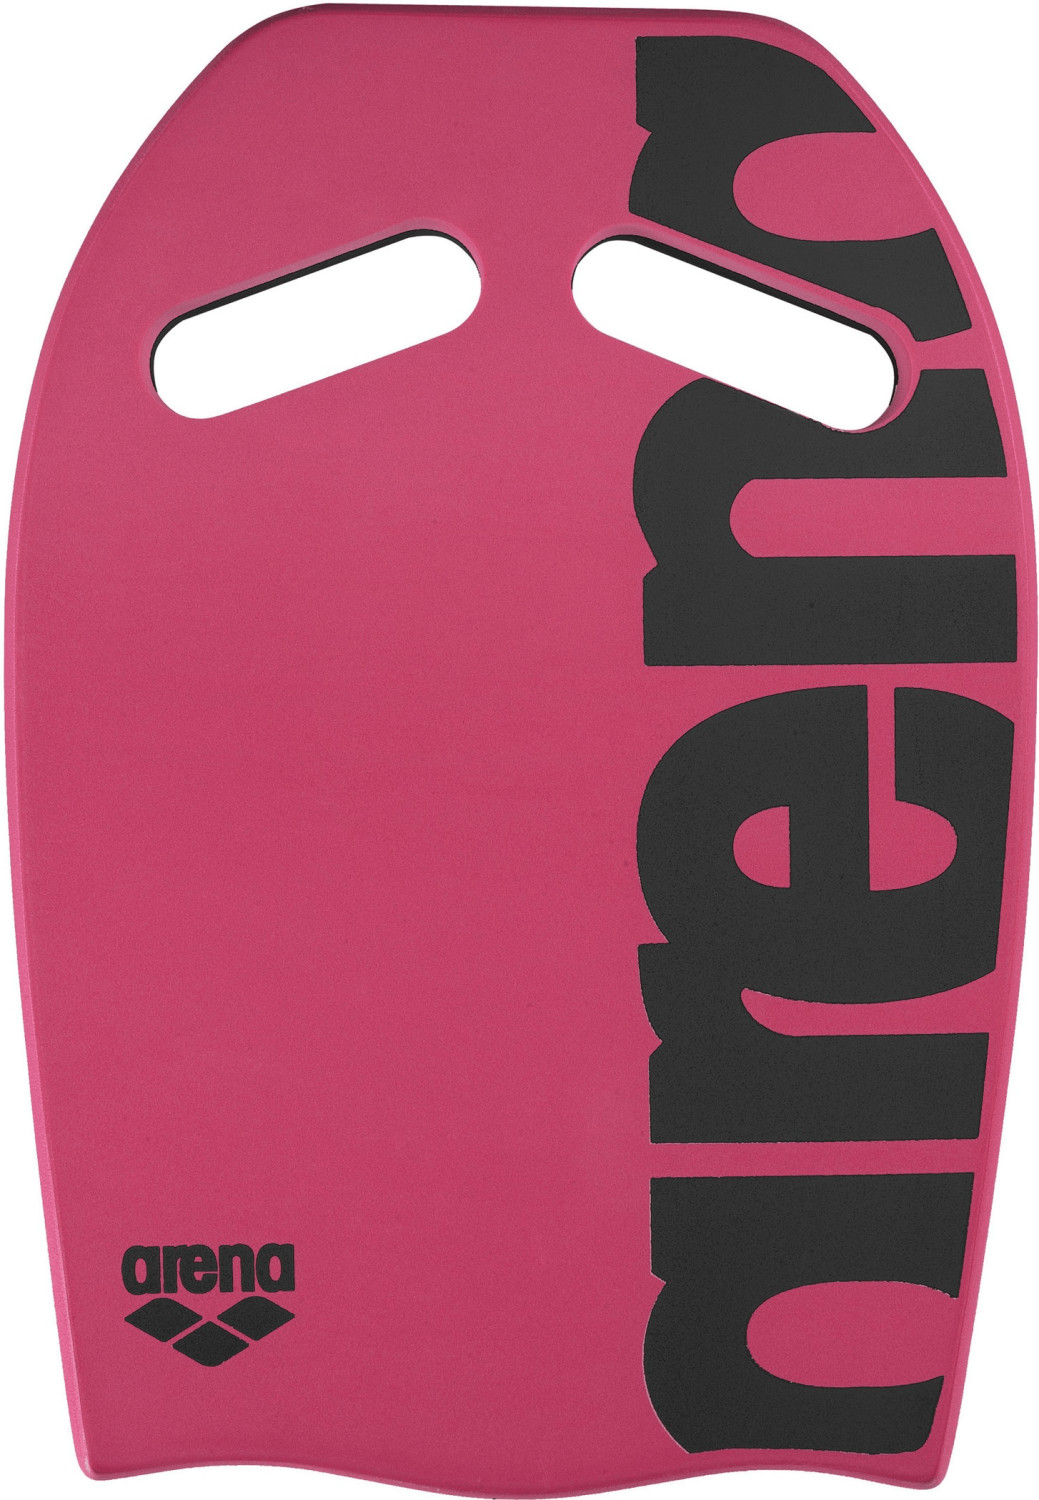 Photos - Swim Ring / Inflatable Armband Arena Swimwear  Kickboard pink 